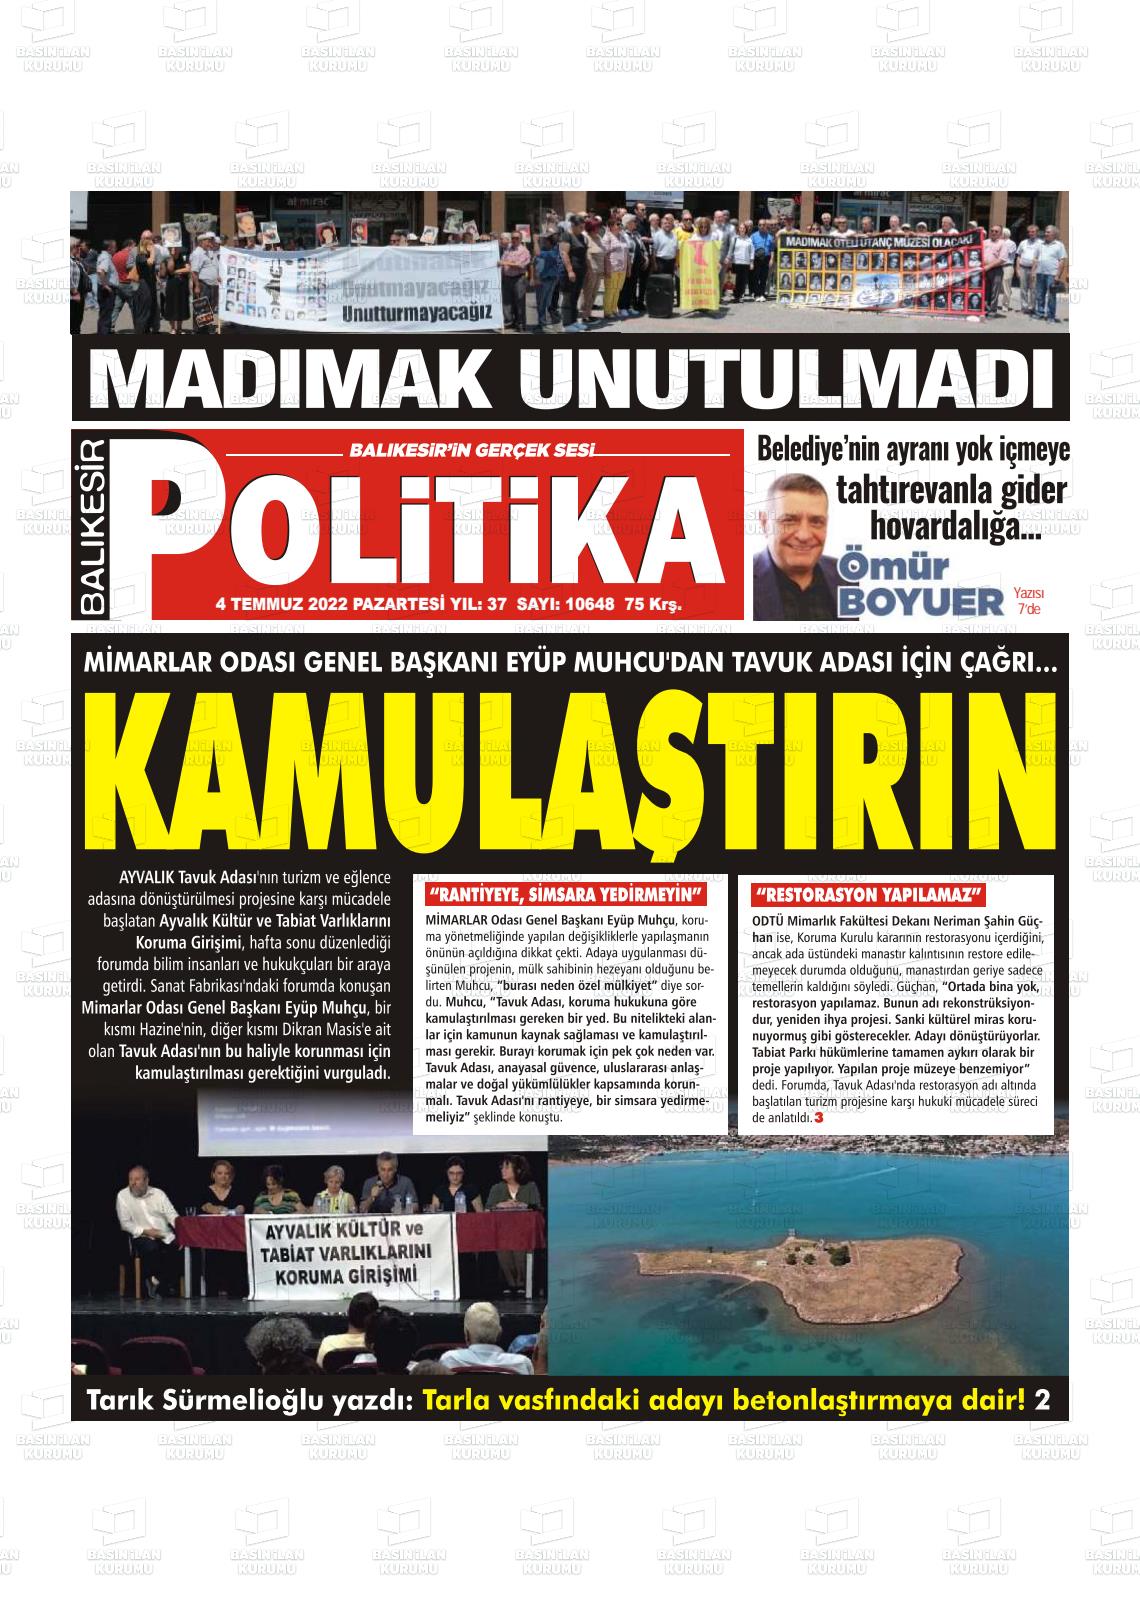 04 Temmuz 2022 Balıkesir Politika Gazete Manşeti